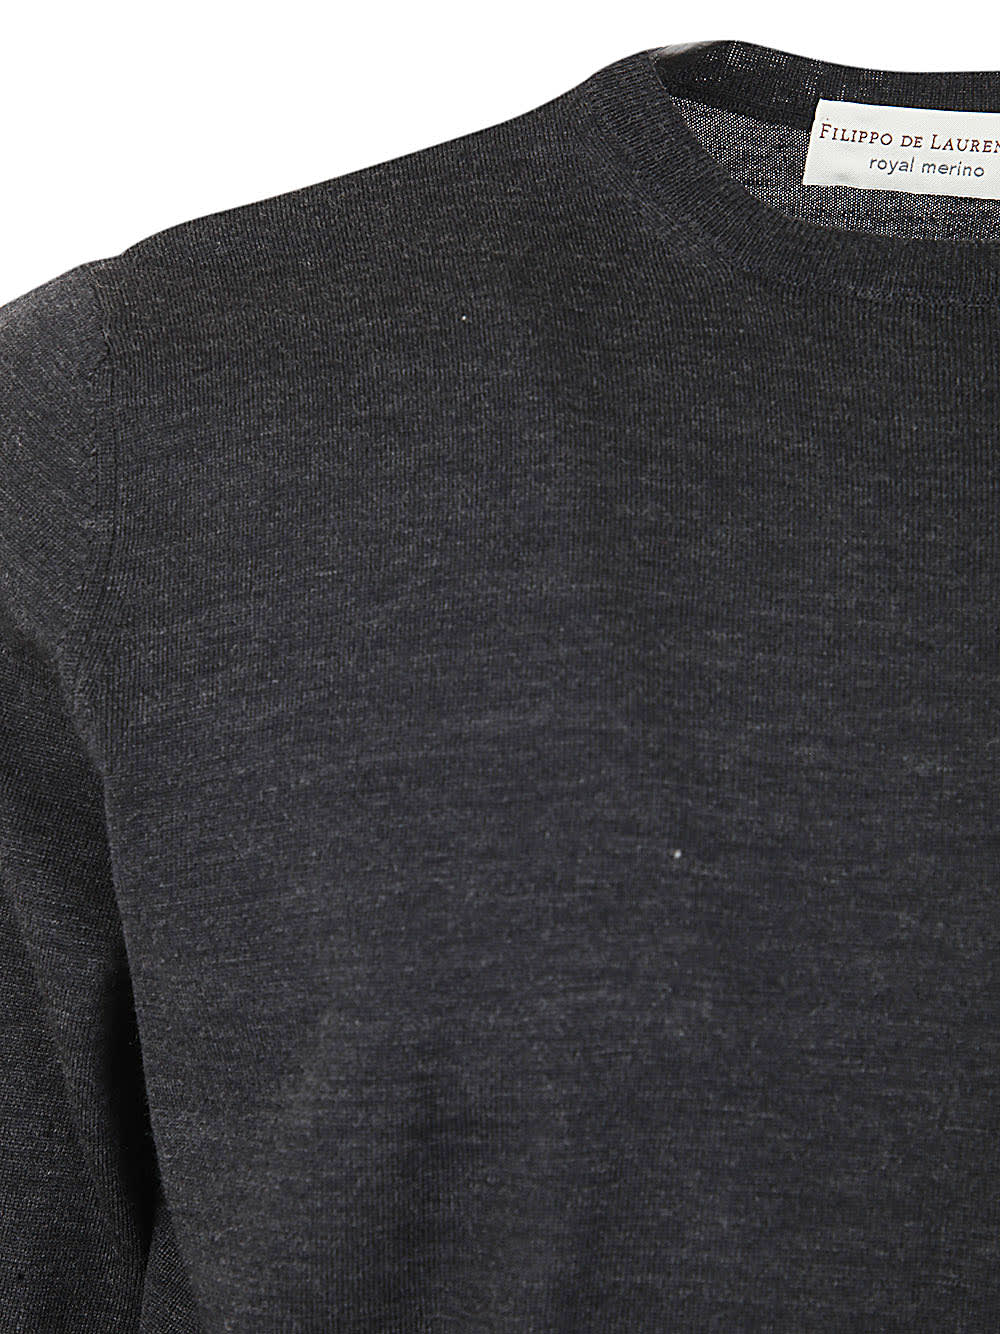 Shop Filippo De Laurentiis Royal Merino Long Sleeves Crew Neck Sweater In Anthracite